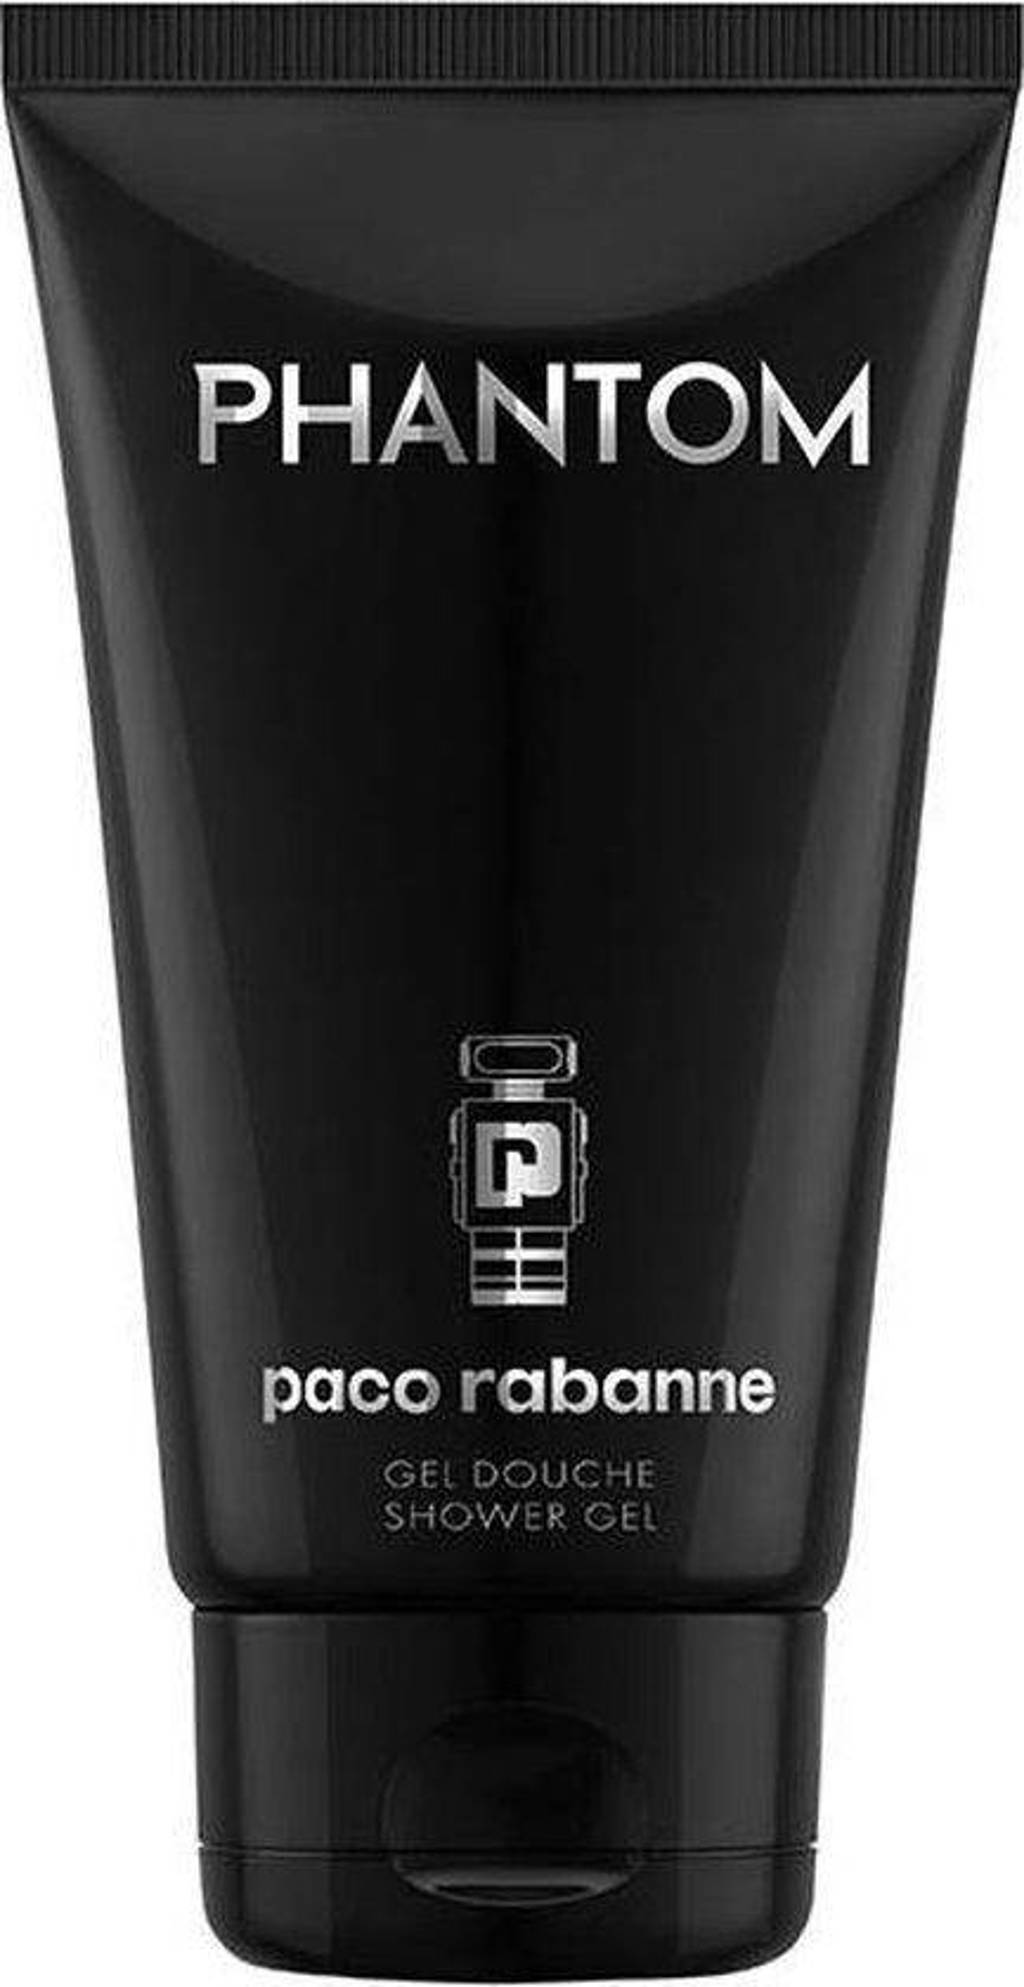 Paco Rabanne Phantom douchegel - 150 ml